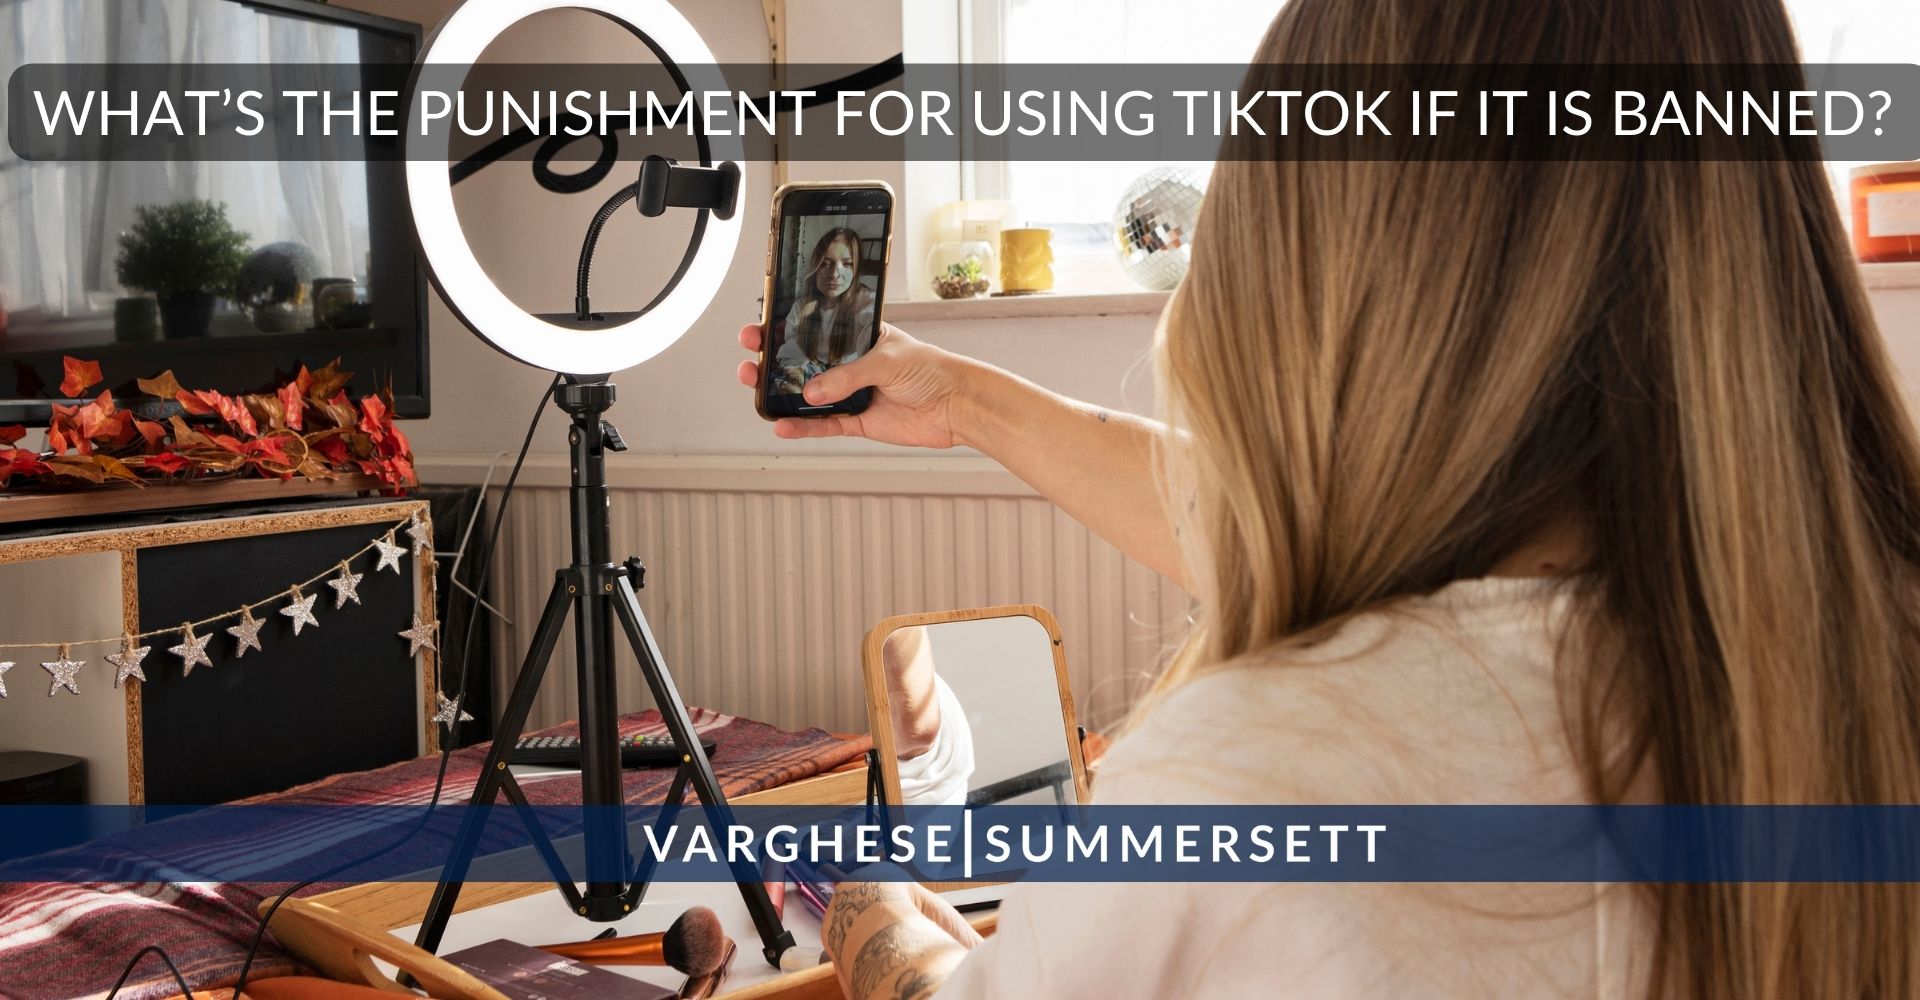 Punishment for TikTok